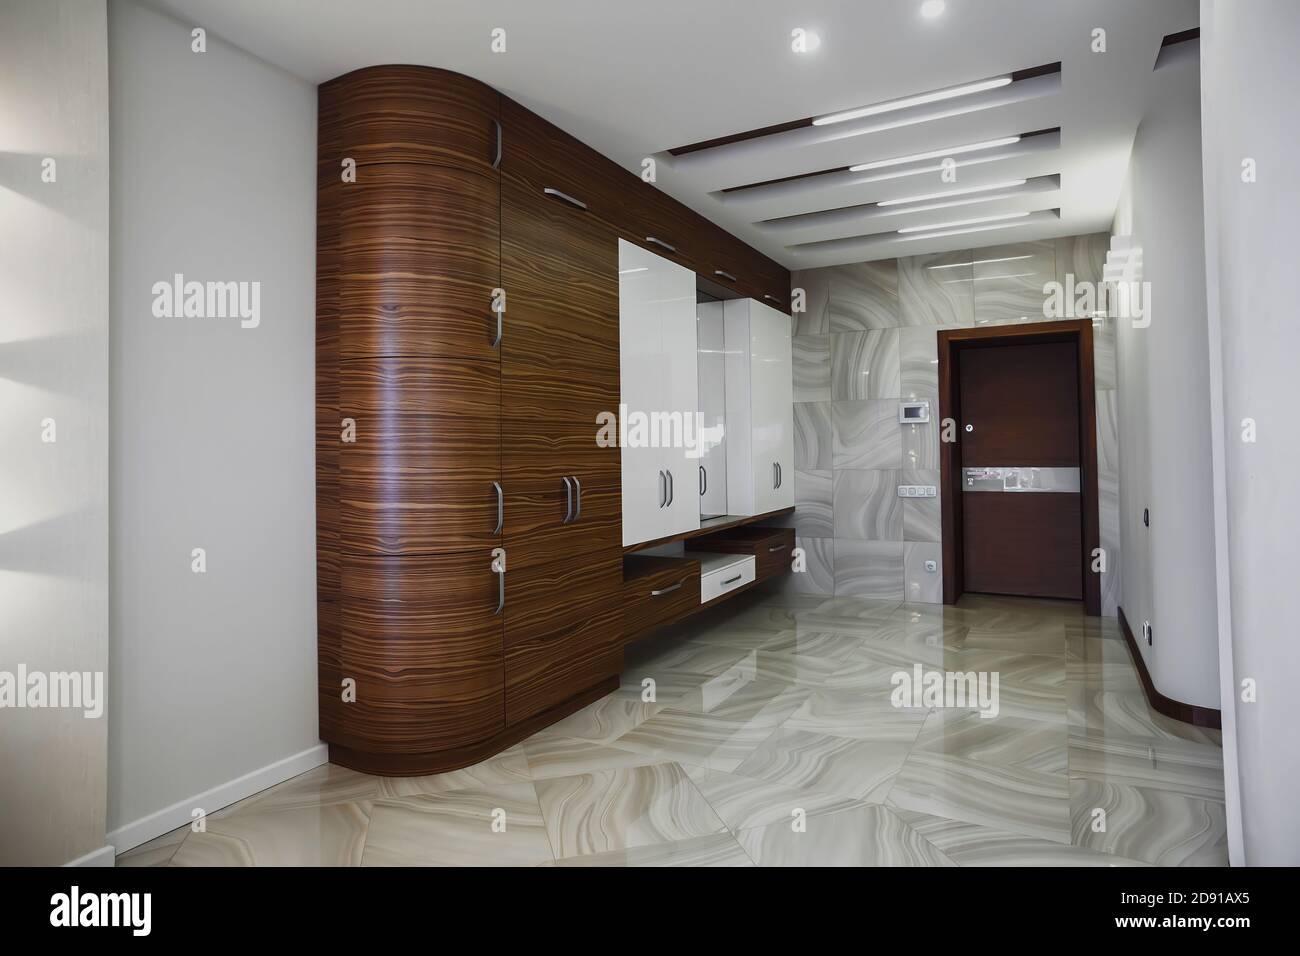 Wooden cabinet in modern hallway interior with luxury marble floor Stock Photo